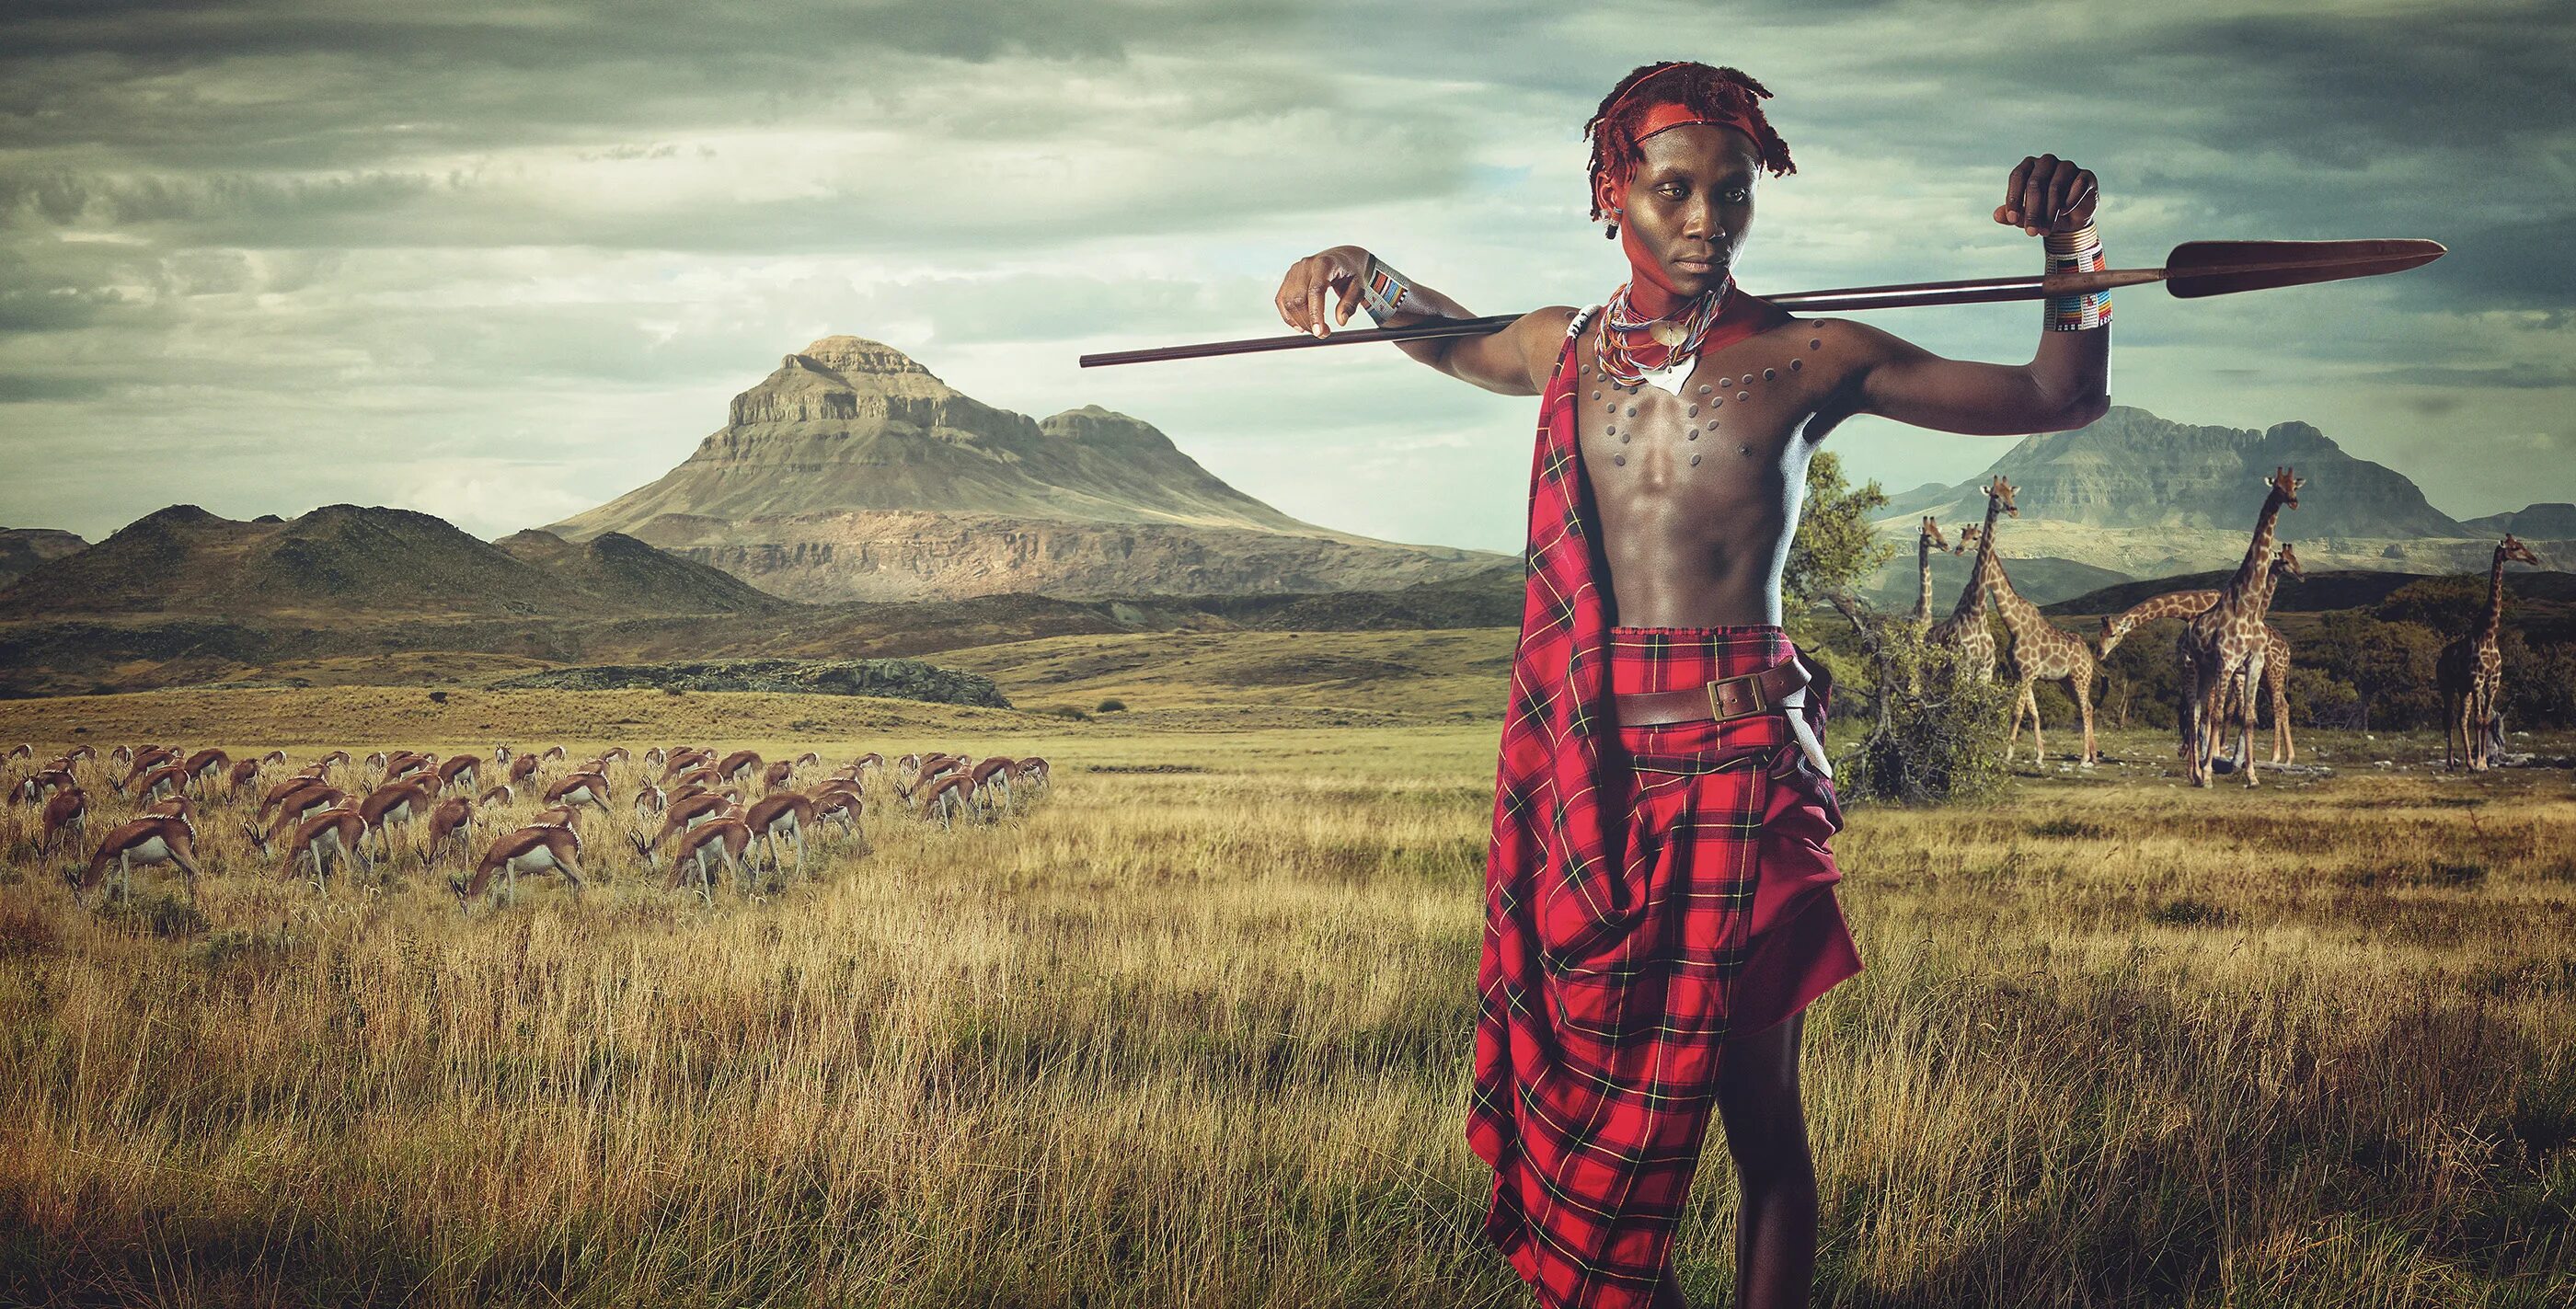 Племя знаменитая. Воин Масаи. Африканский воин Масаи. Африканское племя Масаи.